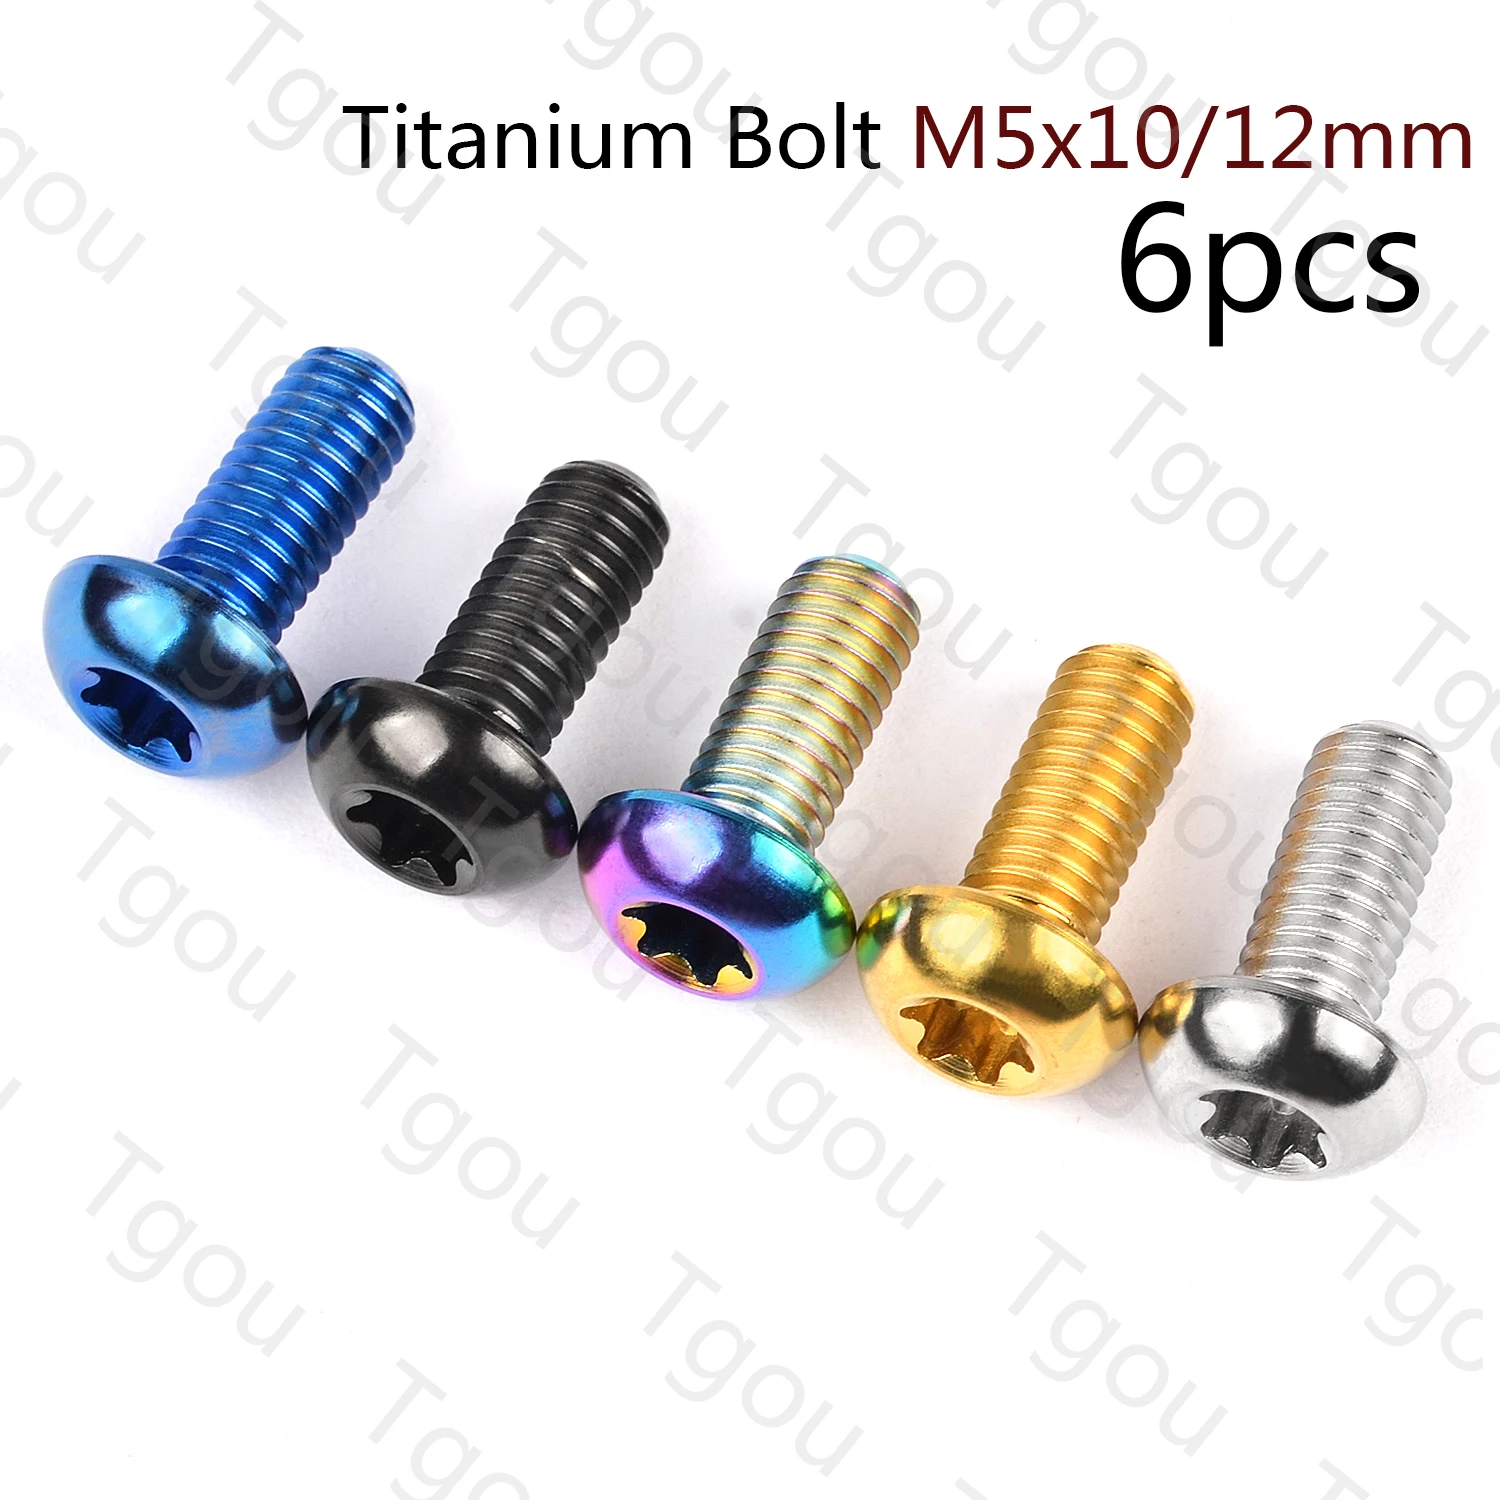 Tgou Titanium Bolt M5x10 12mm Torx T25 Screw for Disc Brake Rotors Mountain Bike 6pcs